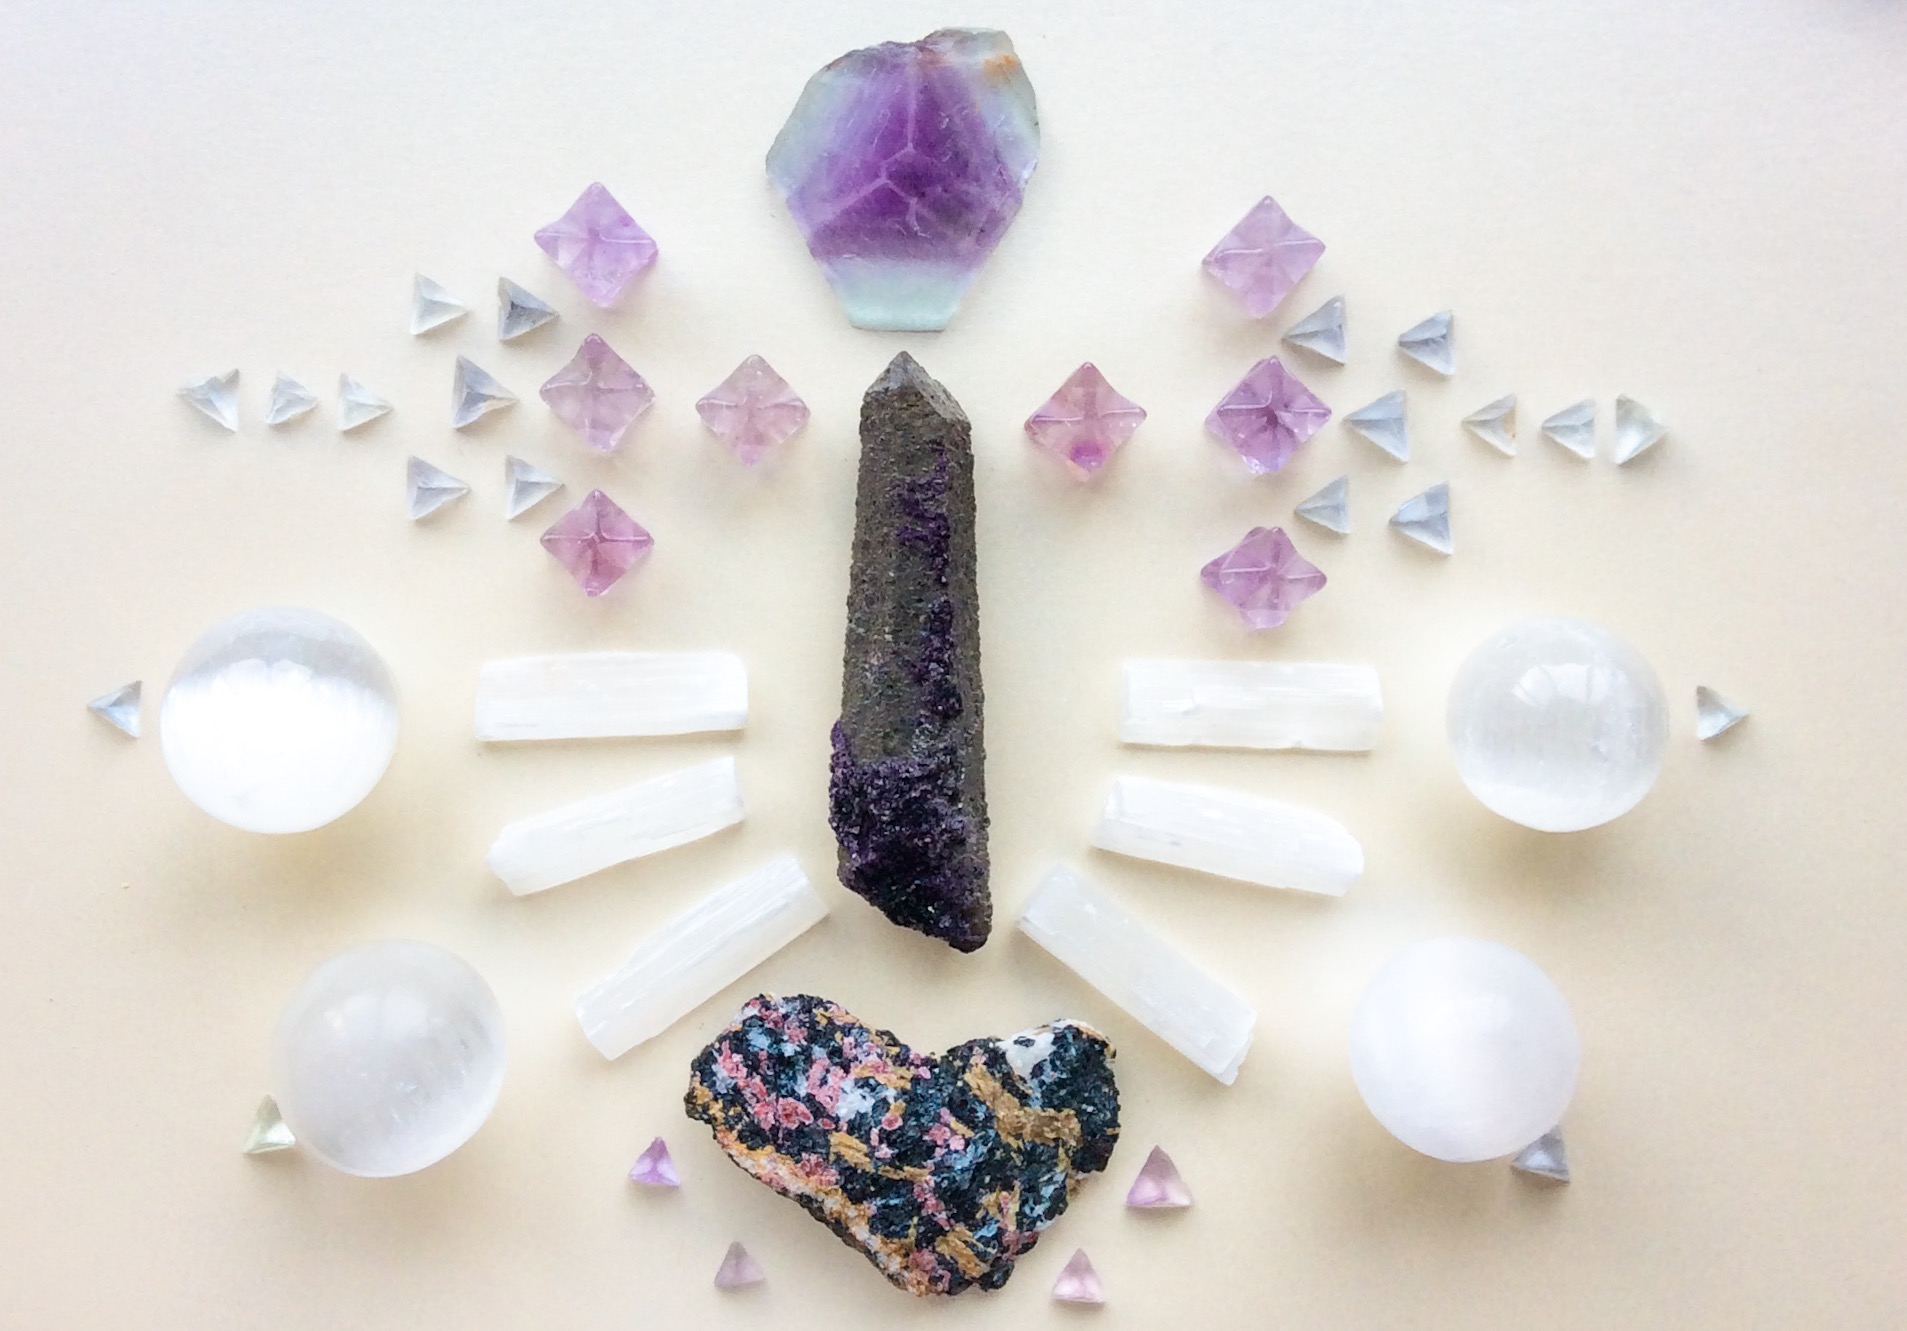 Smoky Quartz 'Sirius Soul' with purple Fluorite, Eudialyte, Amethyst, Fluorite and Selenite